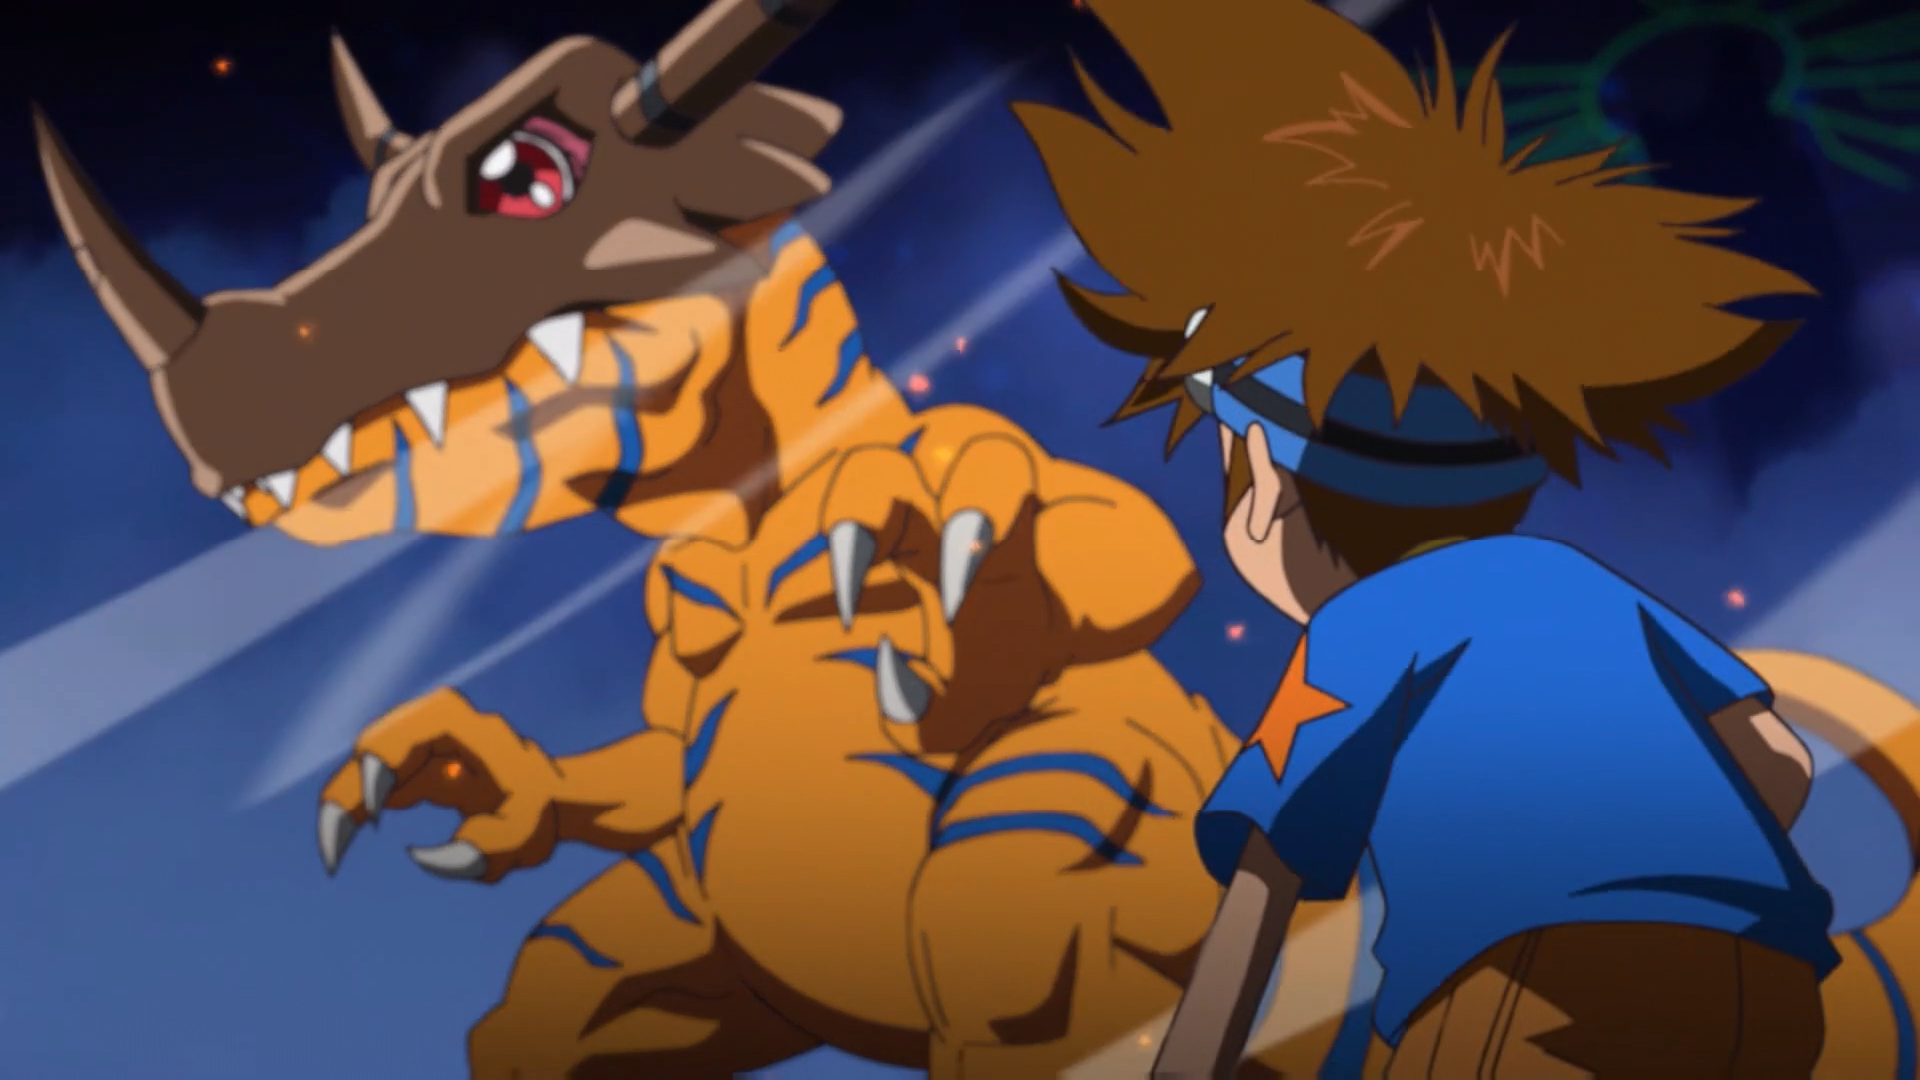 Digimon Adventure tri. - Agumon digivolve para Greymon DUBLADO 